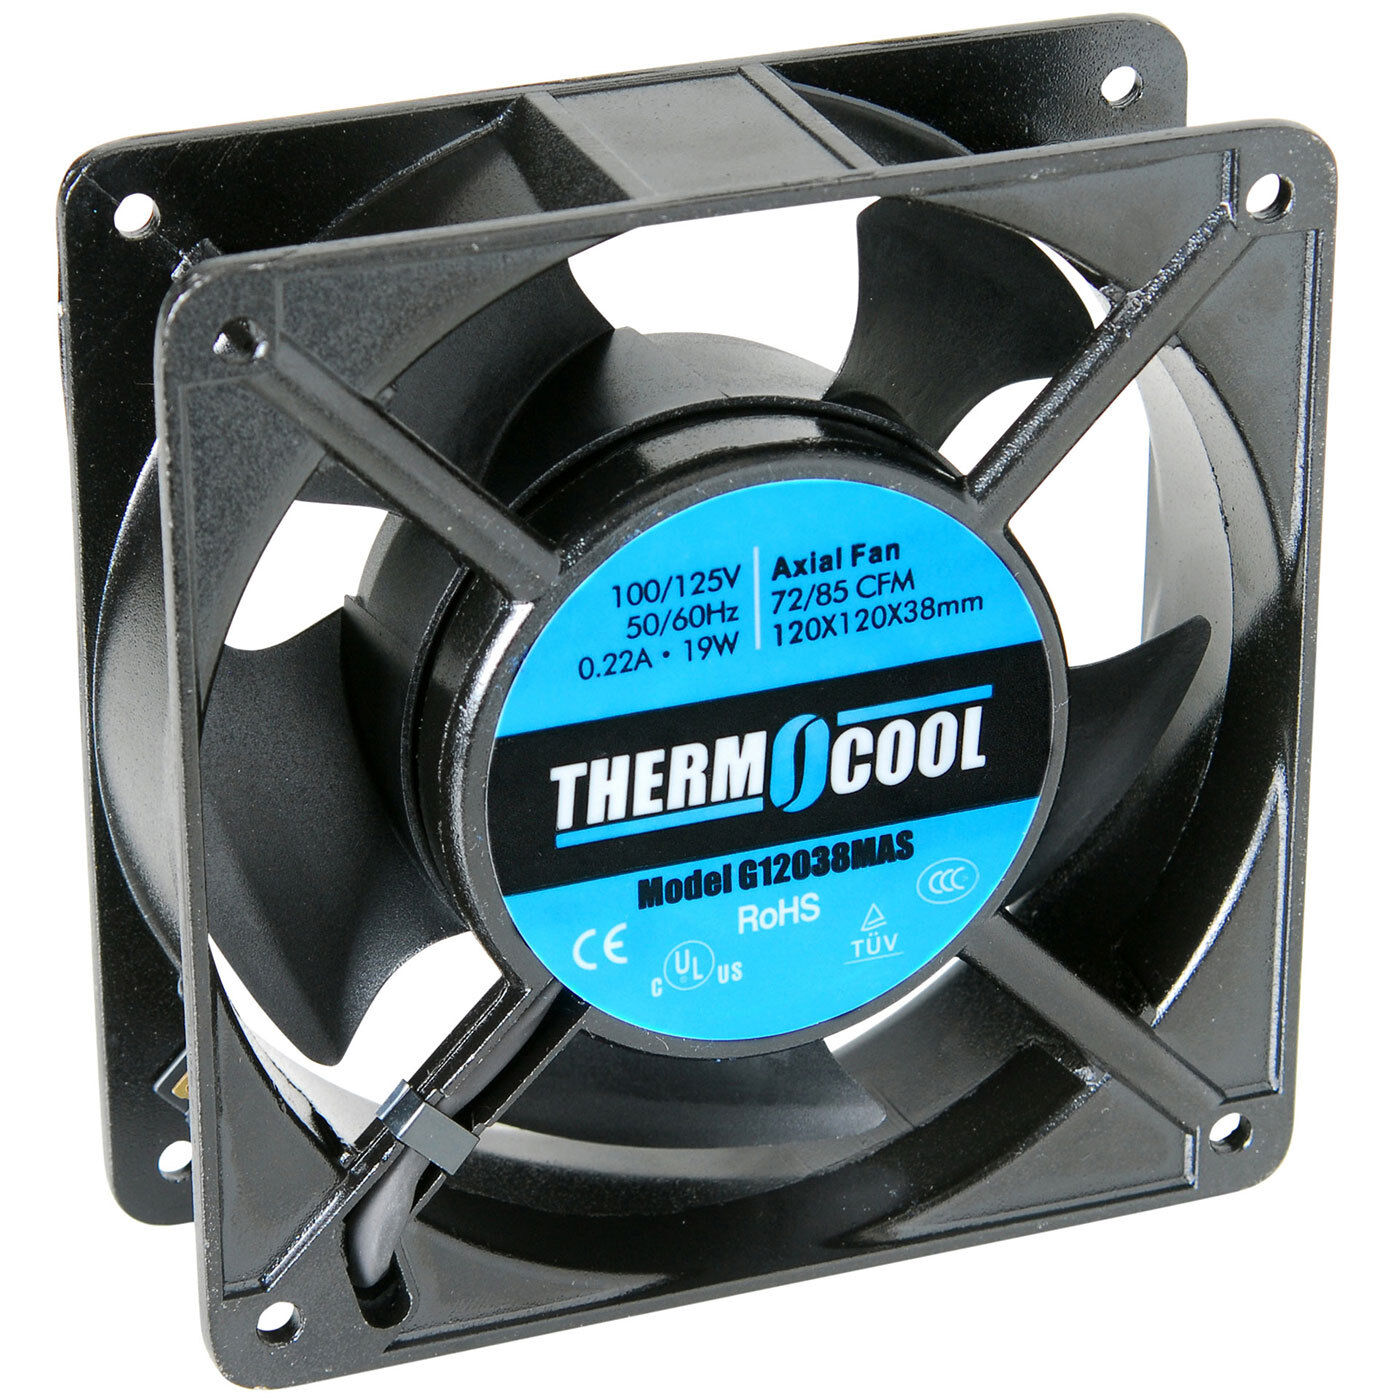 Thermocool 110 VAC Fan 120 x 38mm Sleeve Bearing 72 CFM